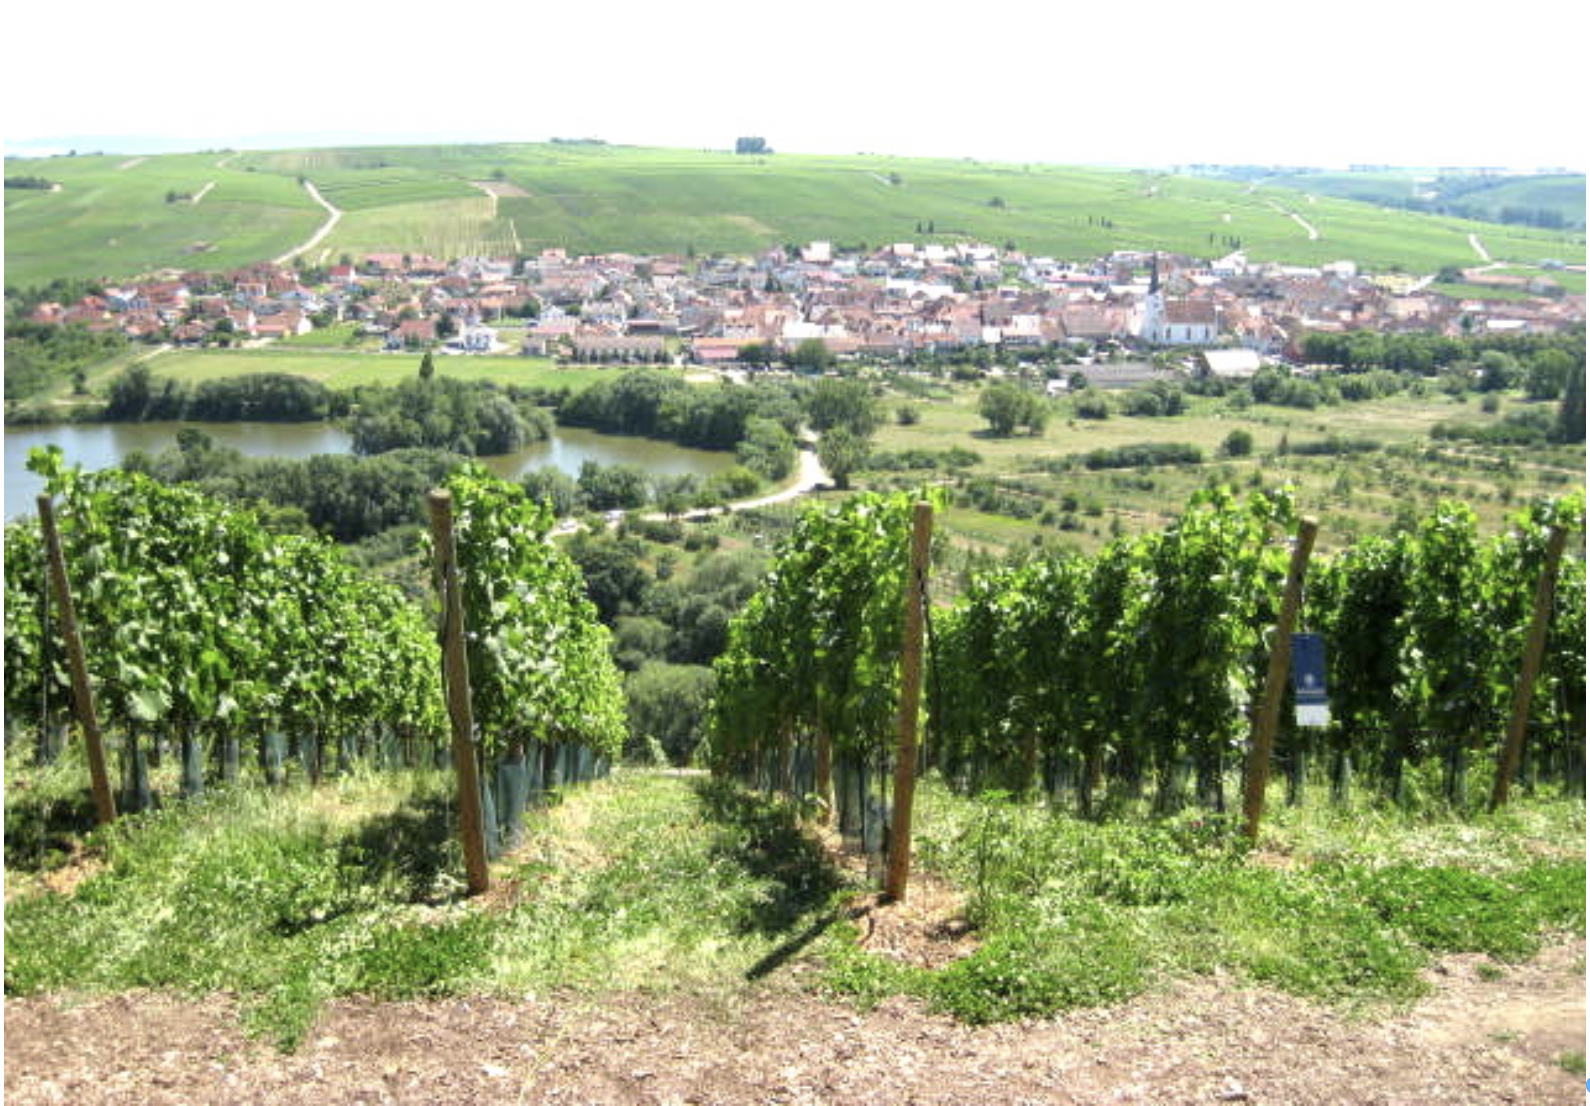 Central Germany, Obereisenheim, Nuernberg, Franconian countryside,
Franks, Roman Empire, wine, vineyards